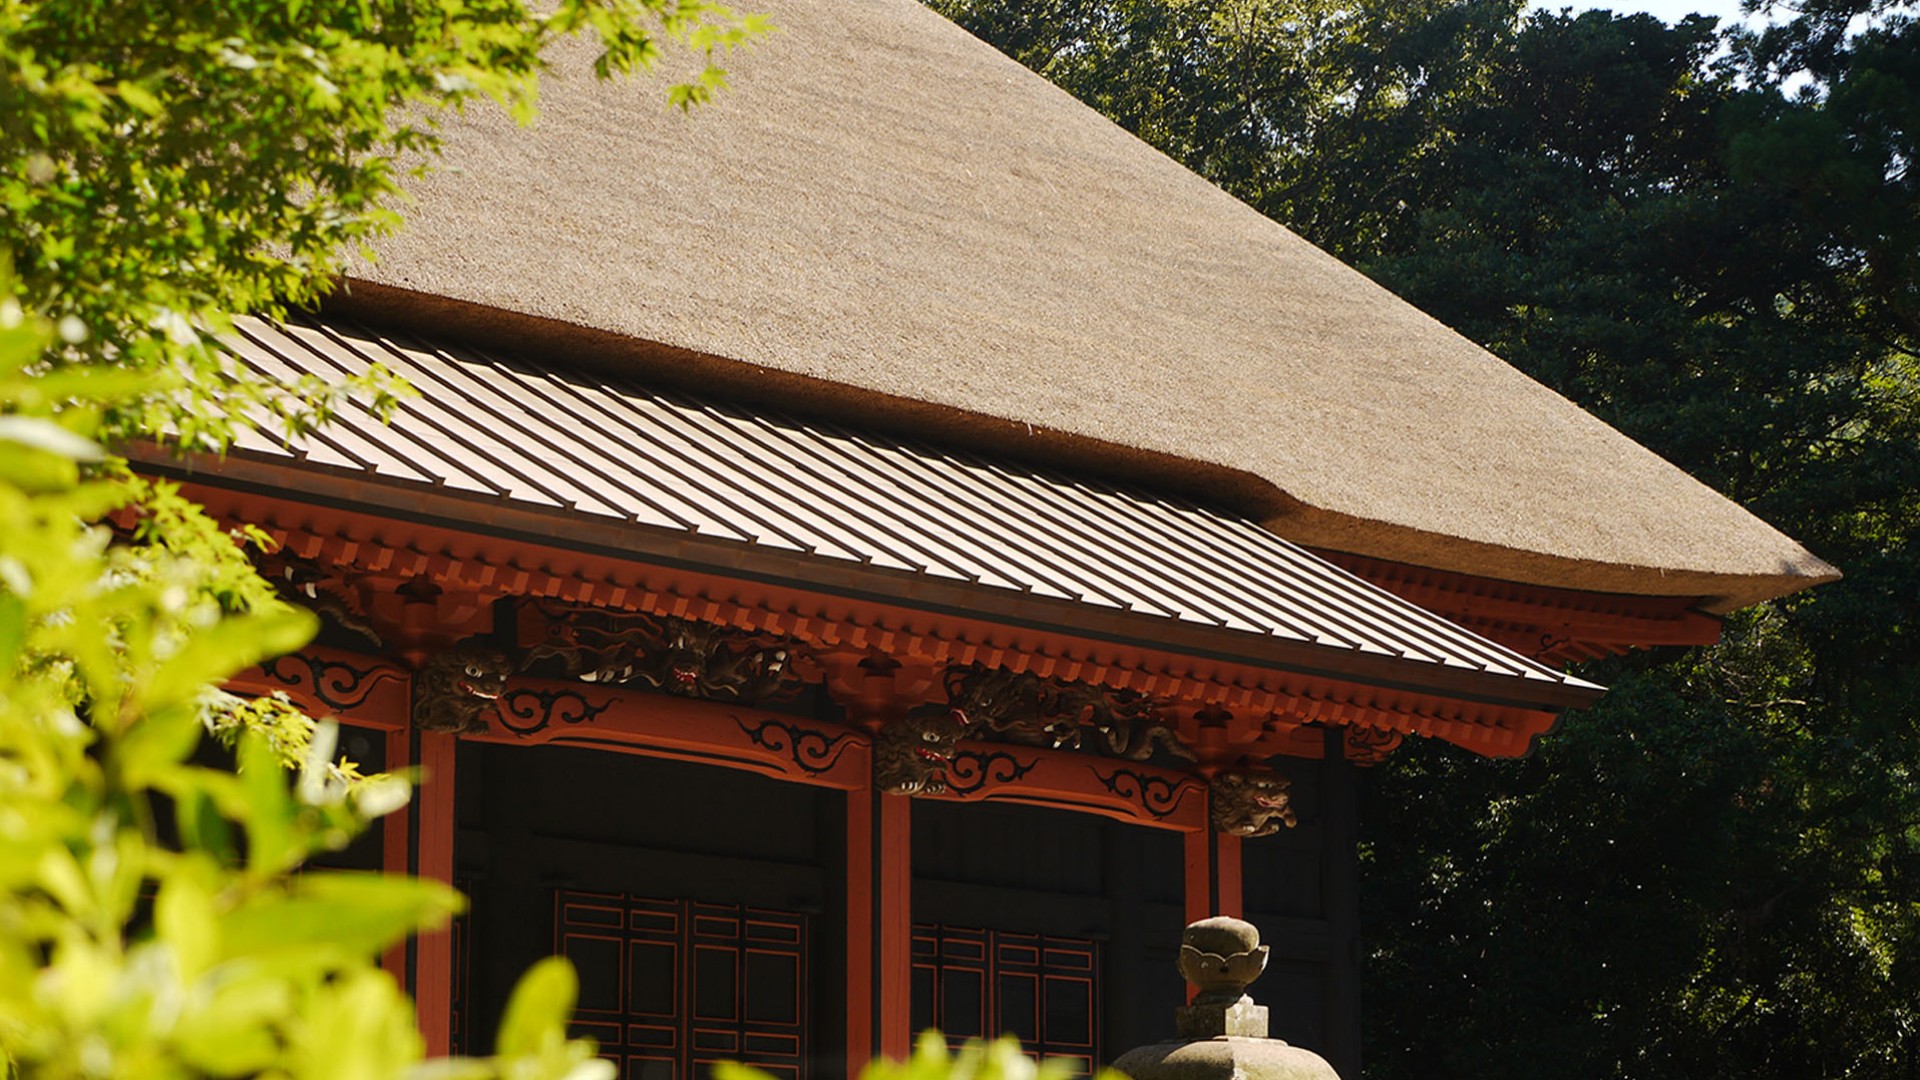 Hinata Yakushi (Buddhist Temple)